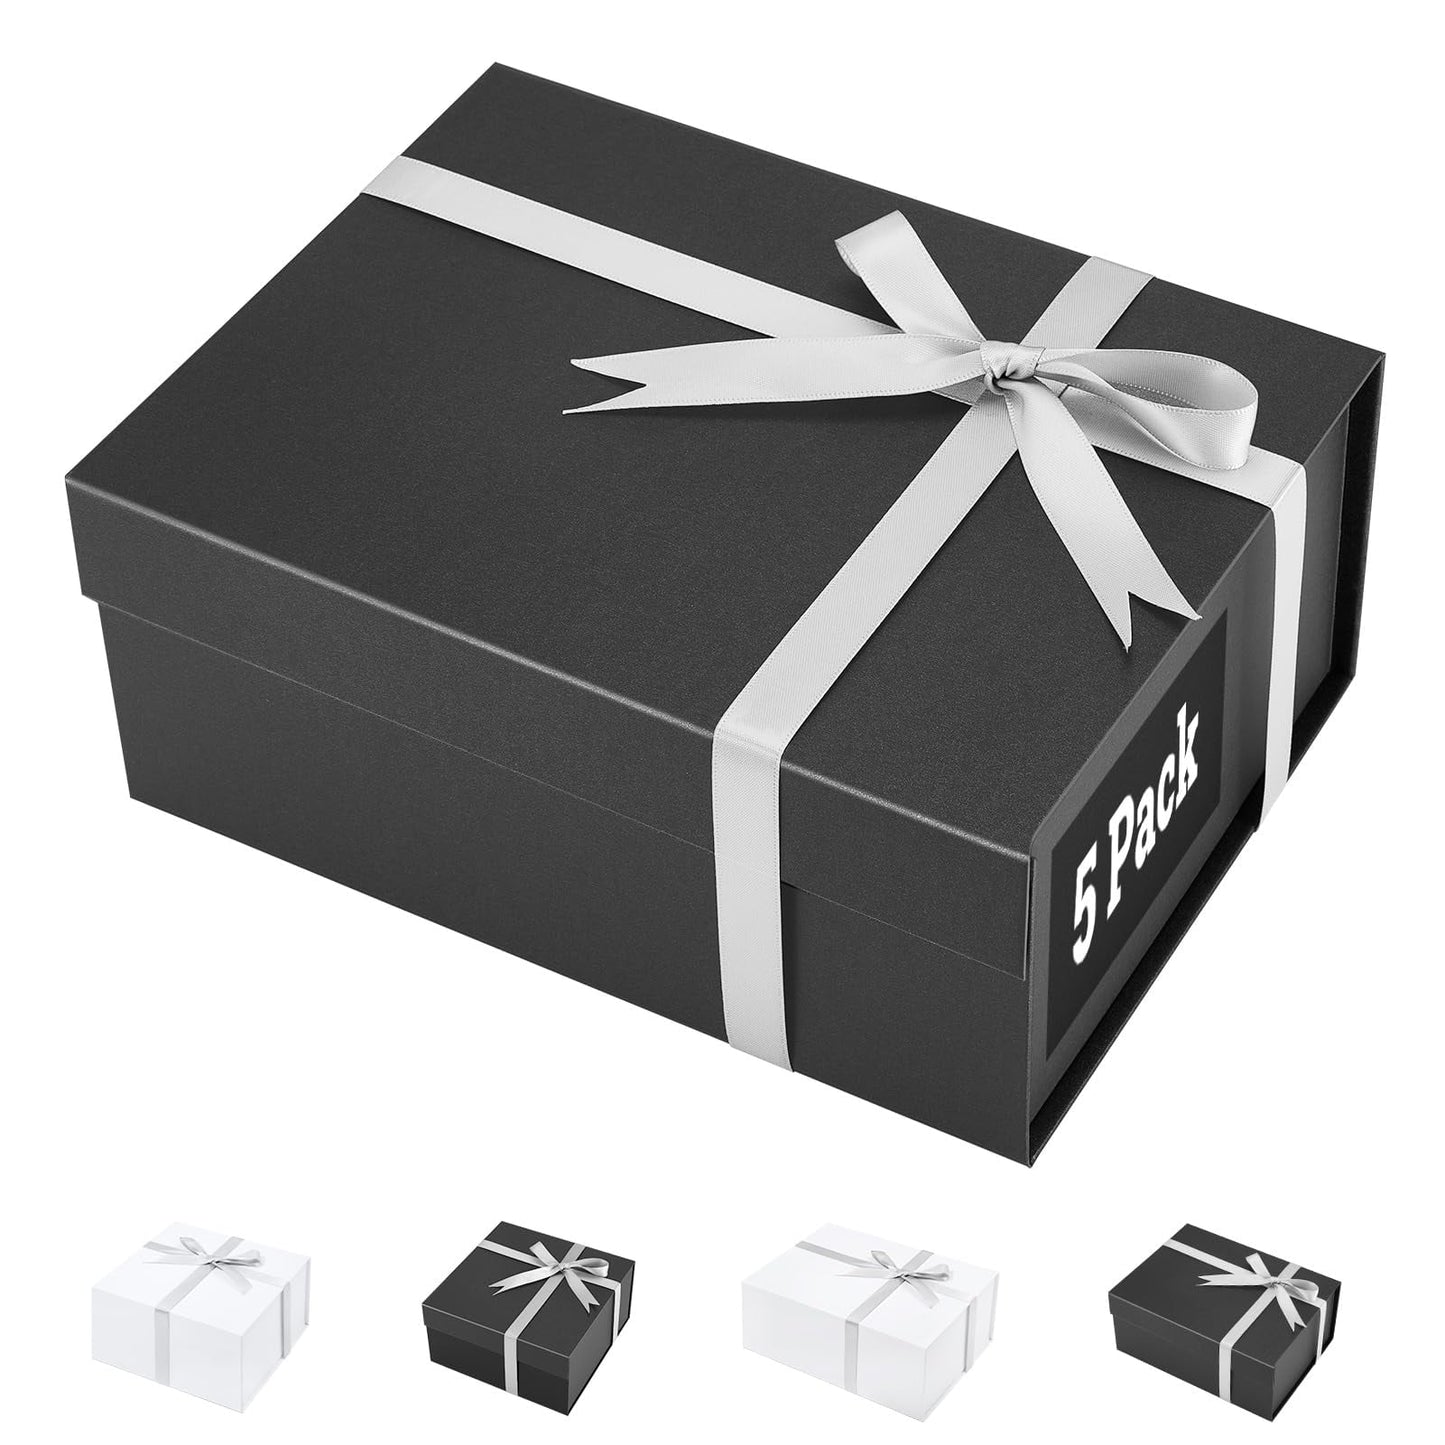 Facsco 5 Pack Gift Boxes for Lids, Magnetic Gift Box for Present, Christmas Gift Box 9.5*7*4 Inch, Black